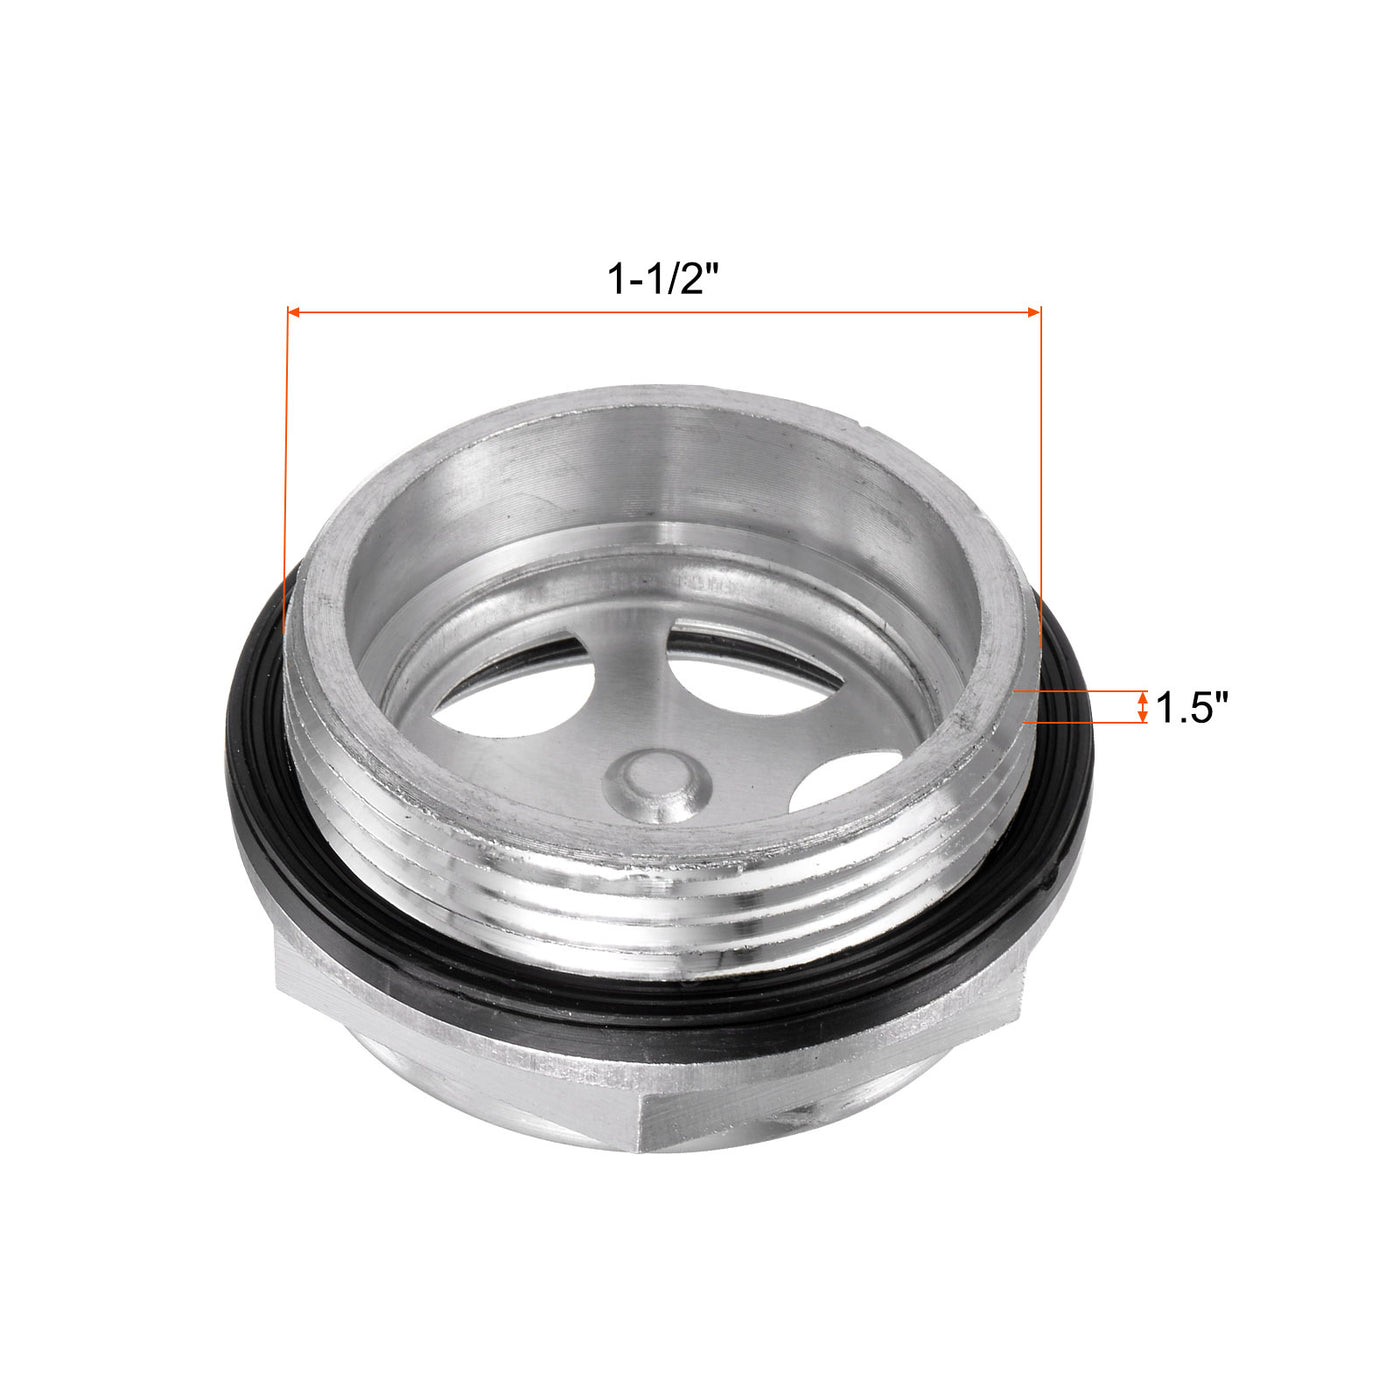 Uxcell Uxcell Air Compressor Oil Level Gauge Sight Glass G1-1/2 Male Thread Aluminum 2Pcs